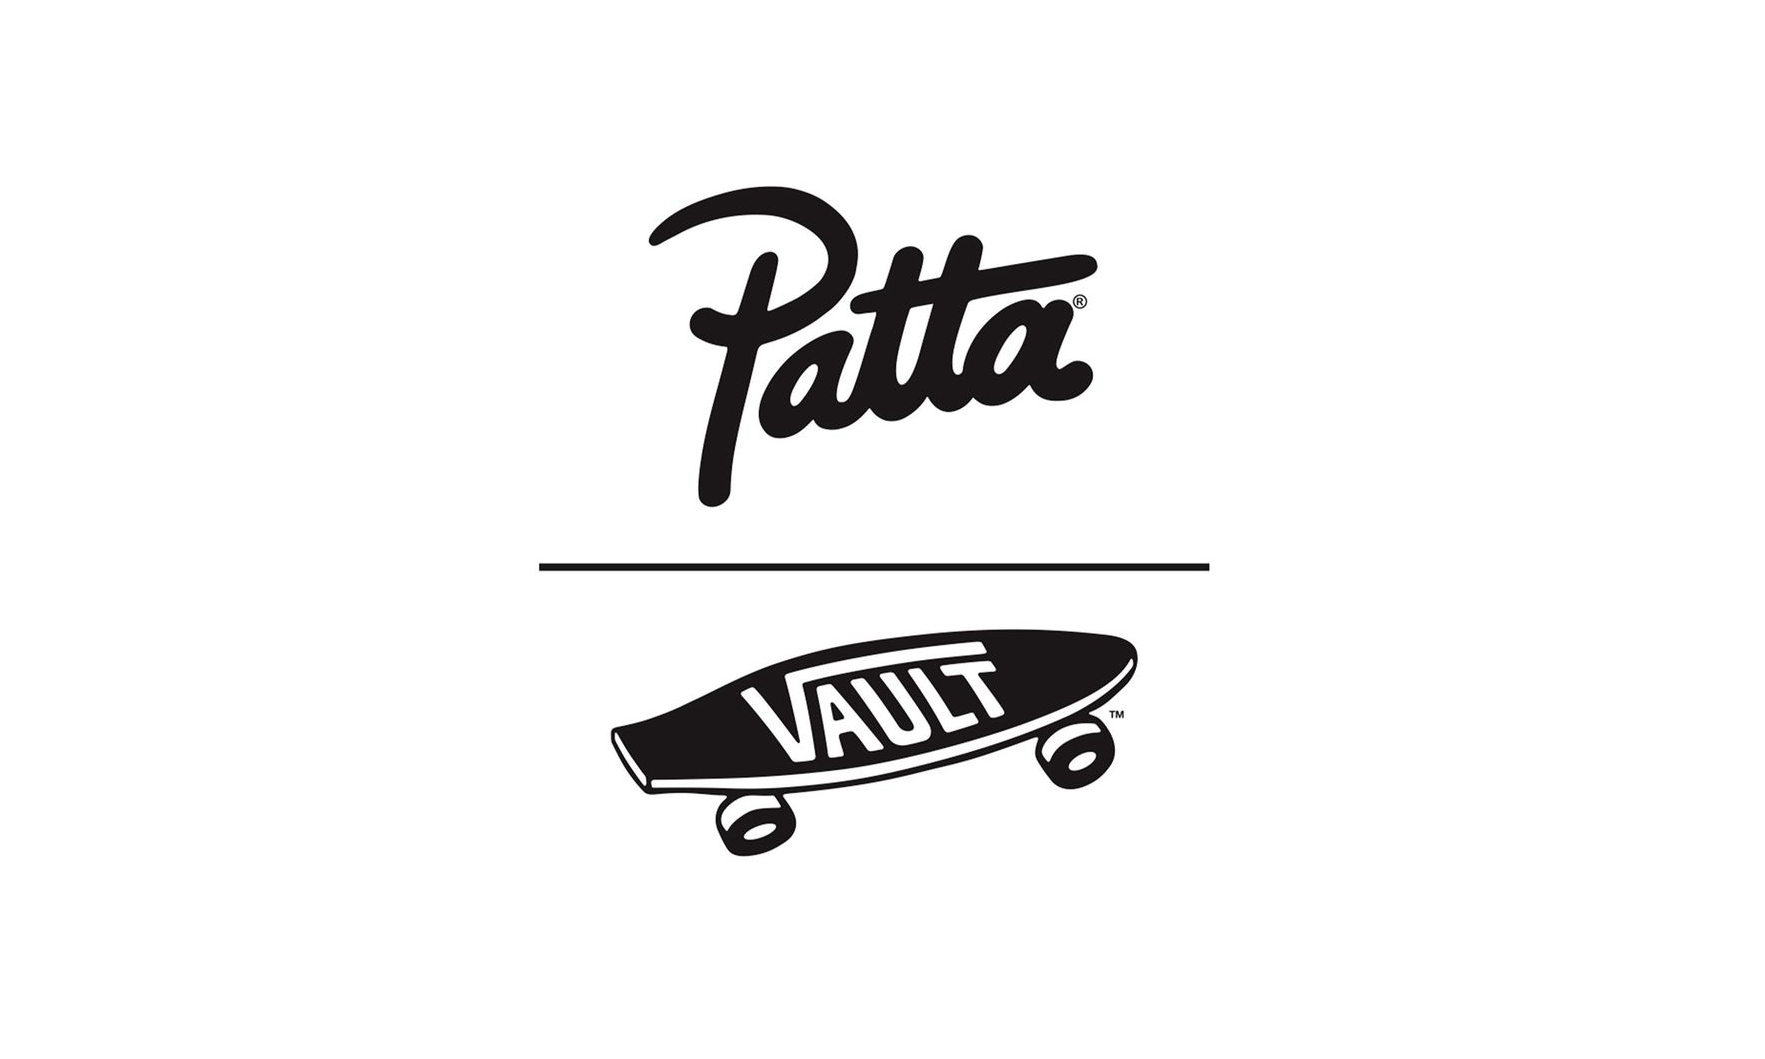 Patta 公开与 Vault by Vans 全新合作企划